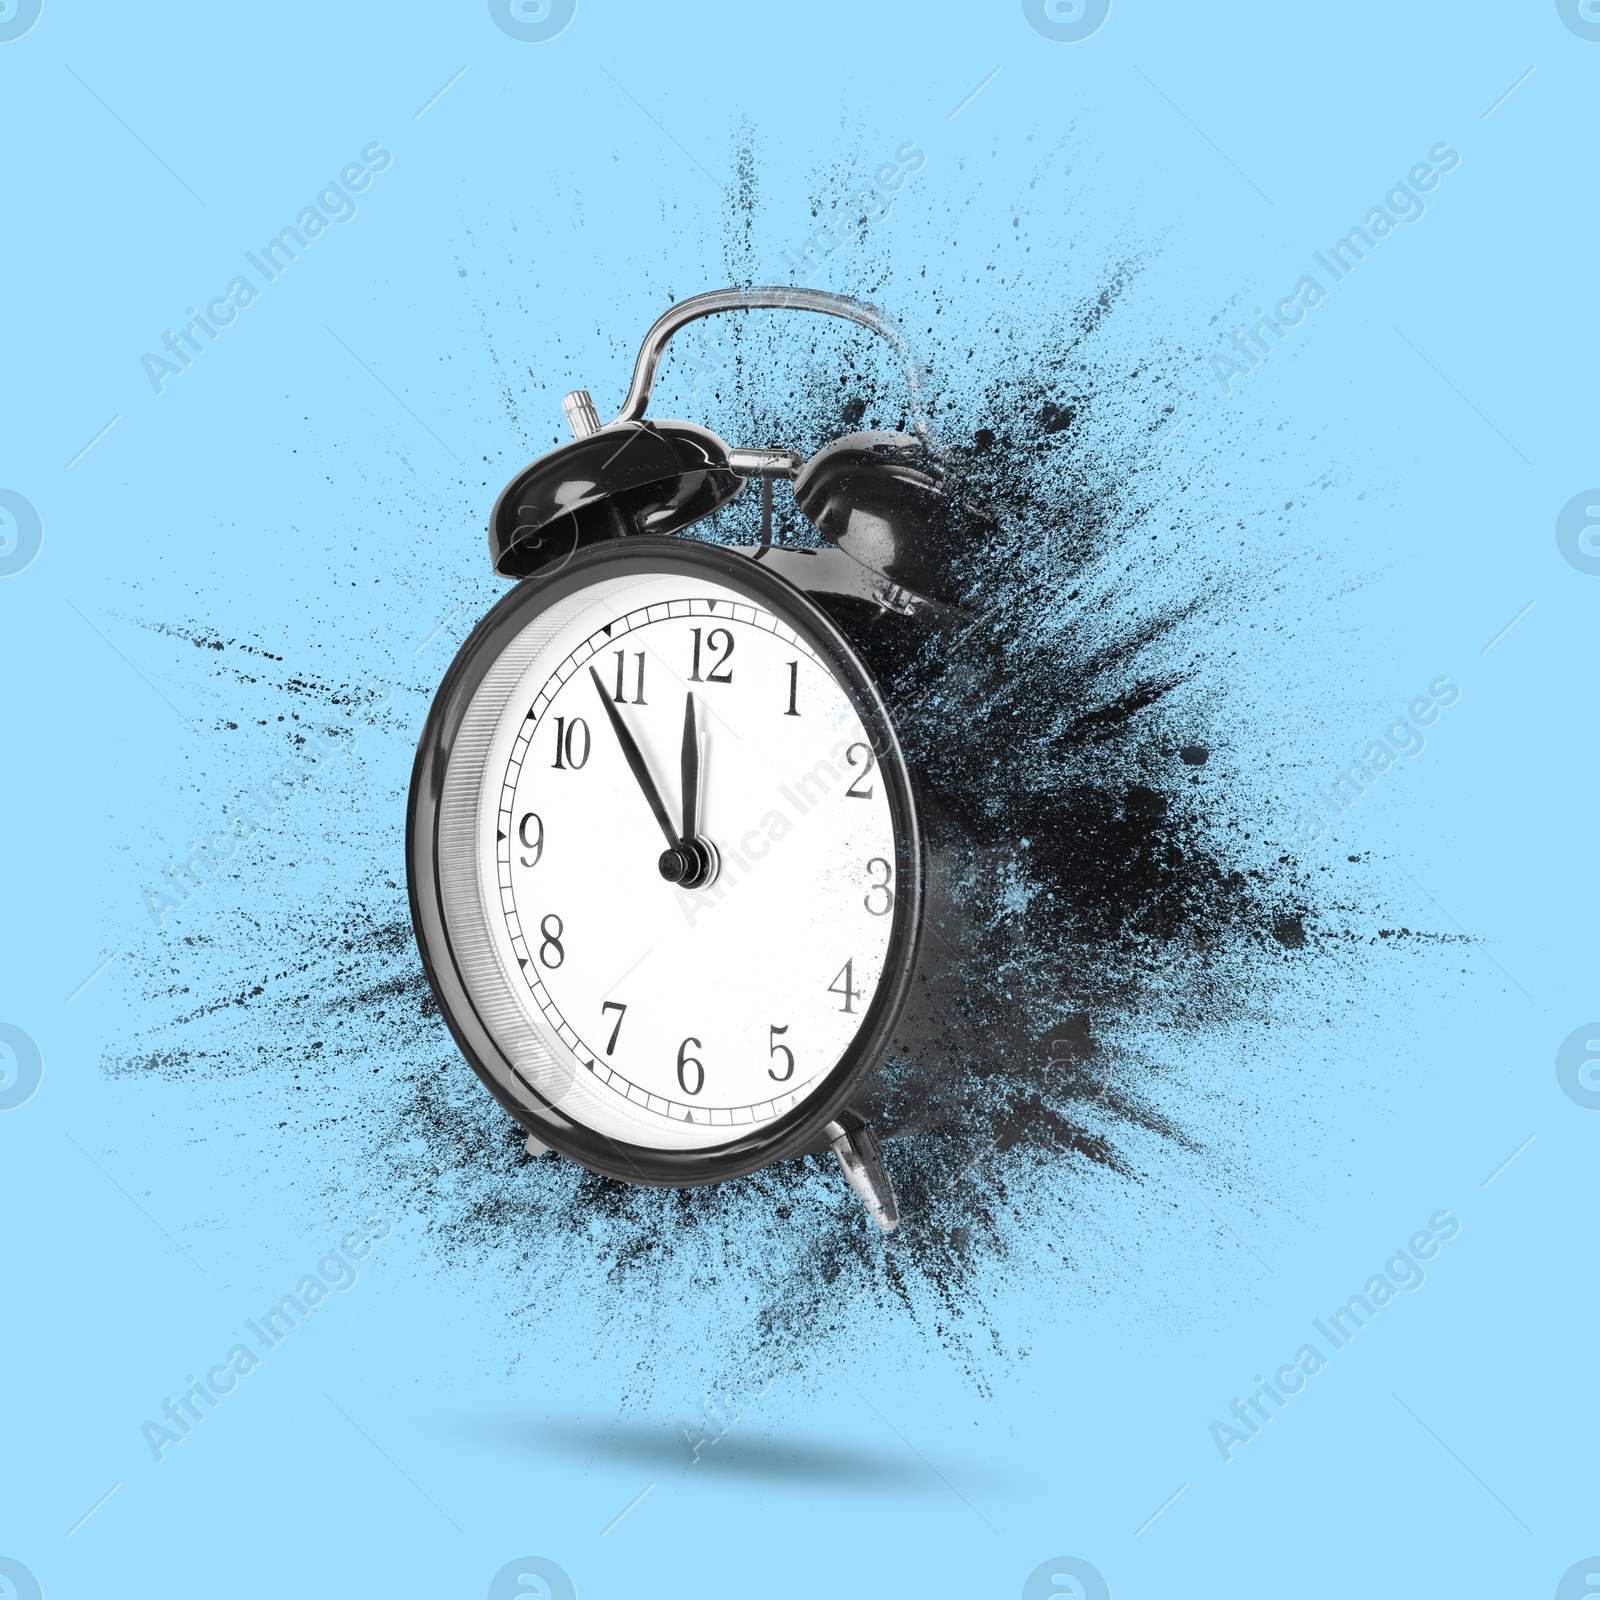 Image of Black alarm clock dissolving on light blue background. Flow of time